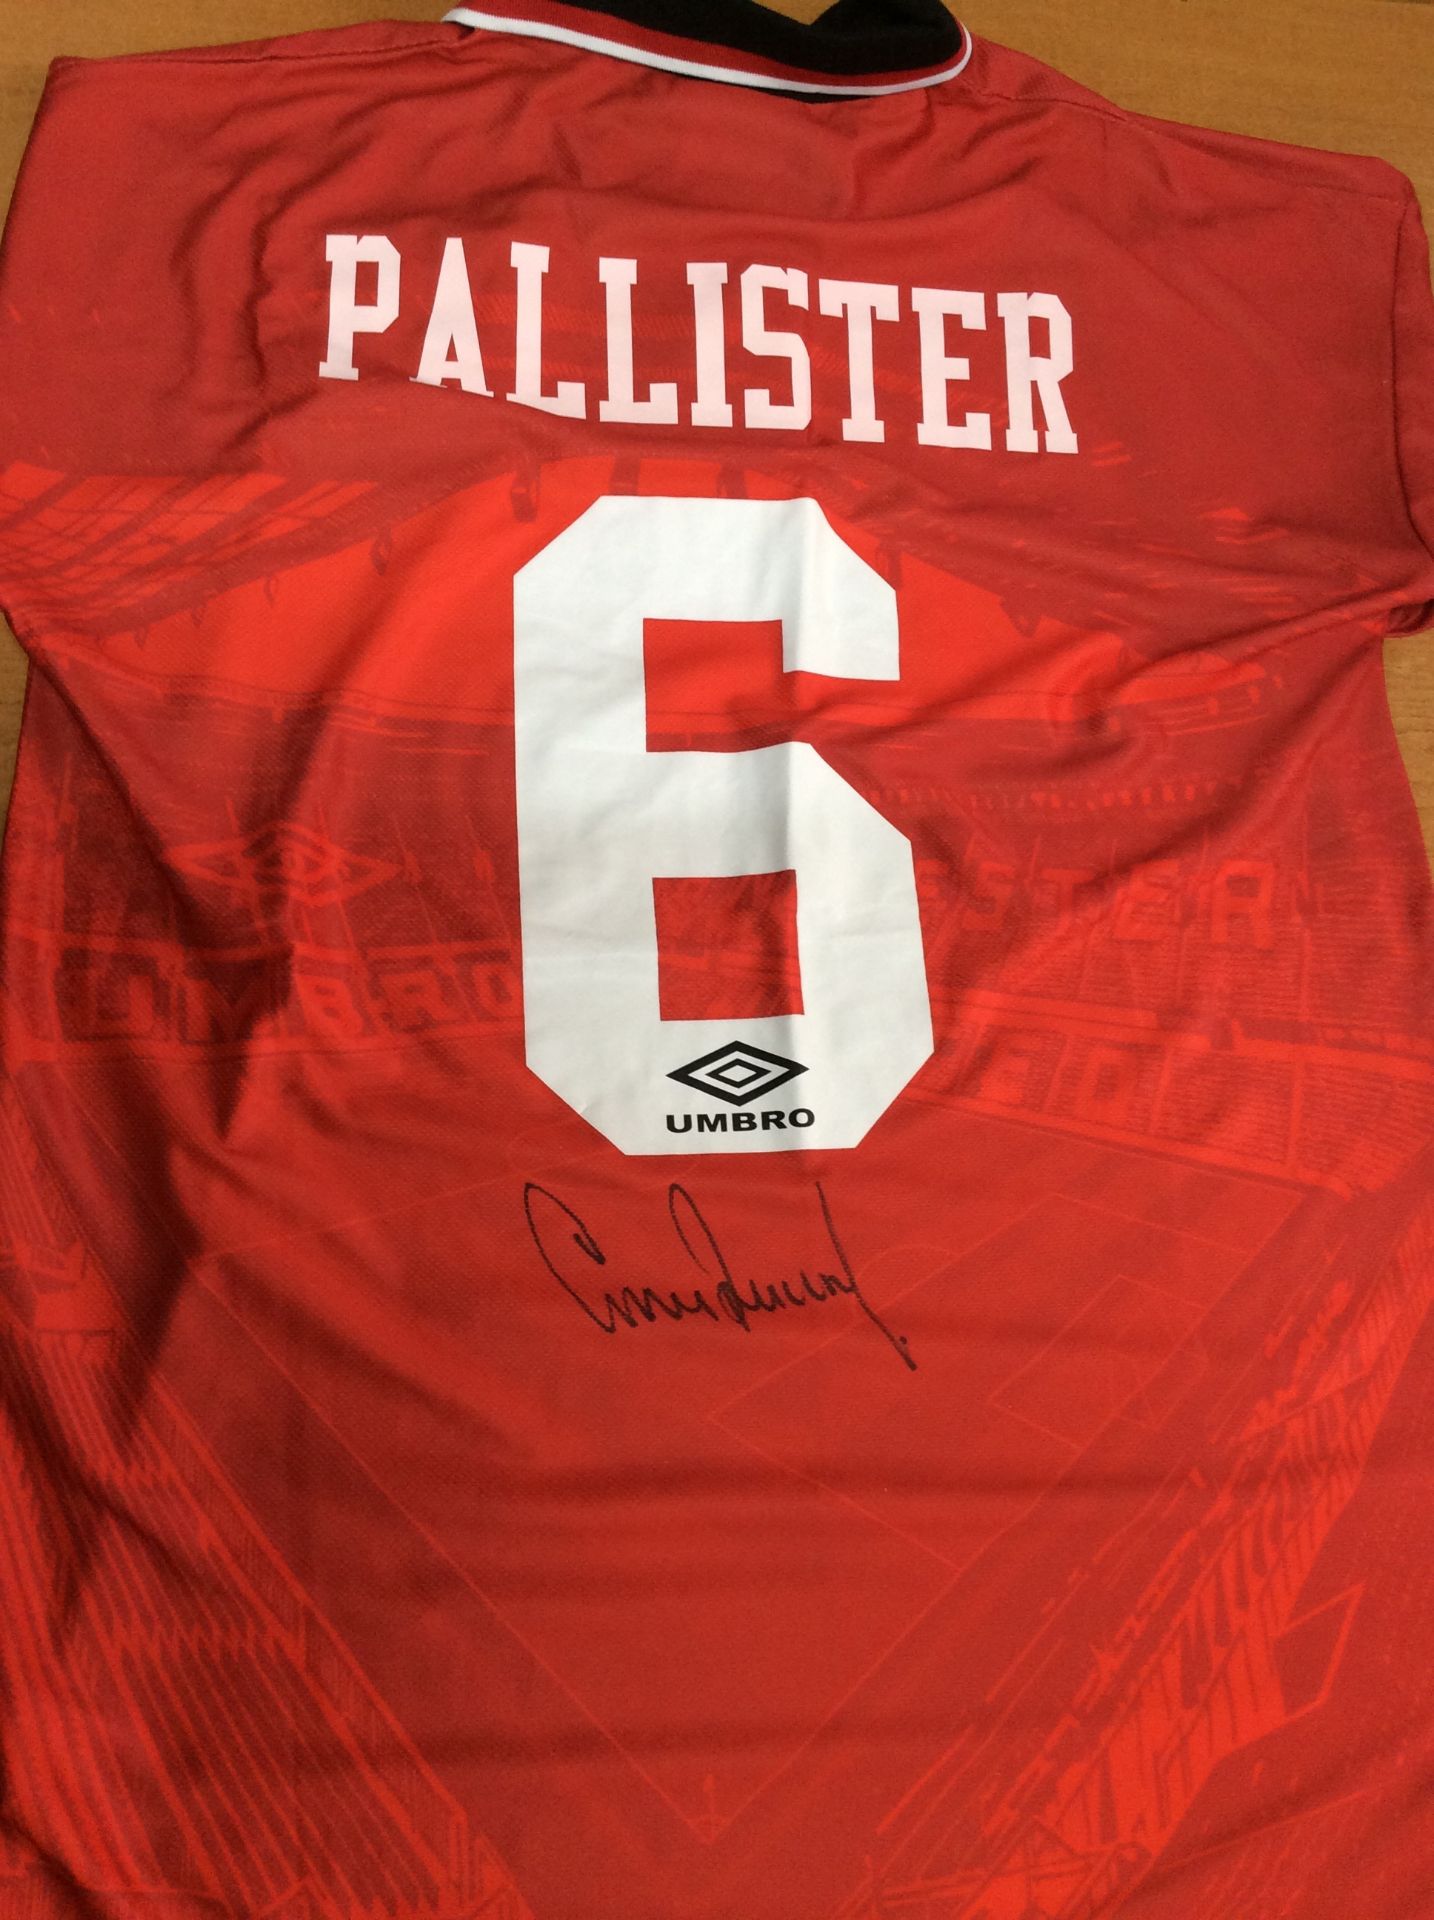 Gary Pallister Signed Shirt - Image 2 of 3